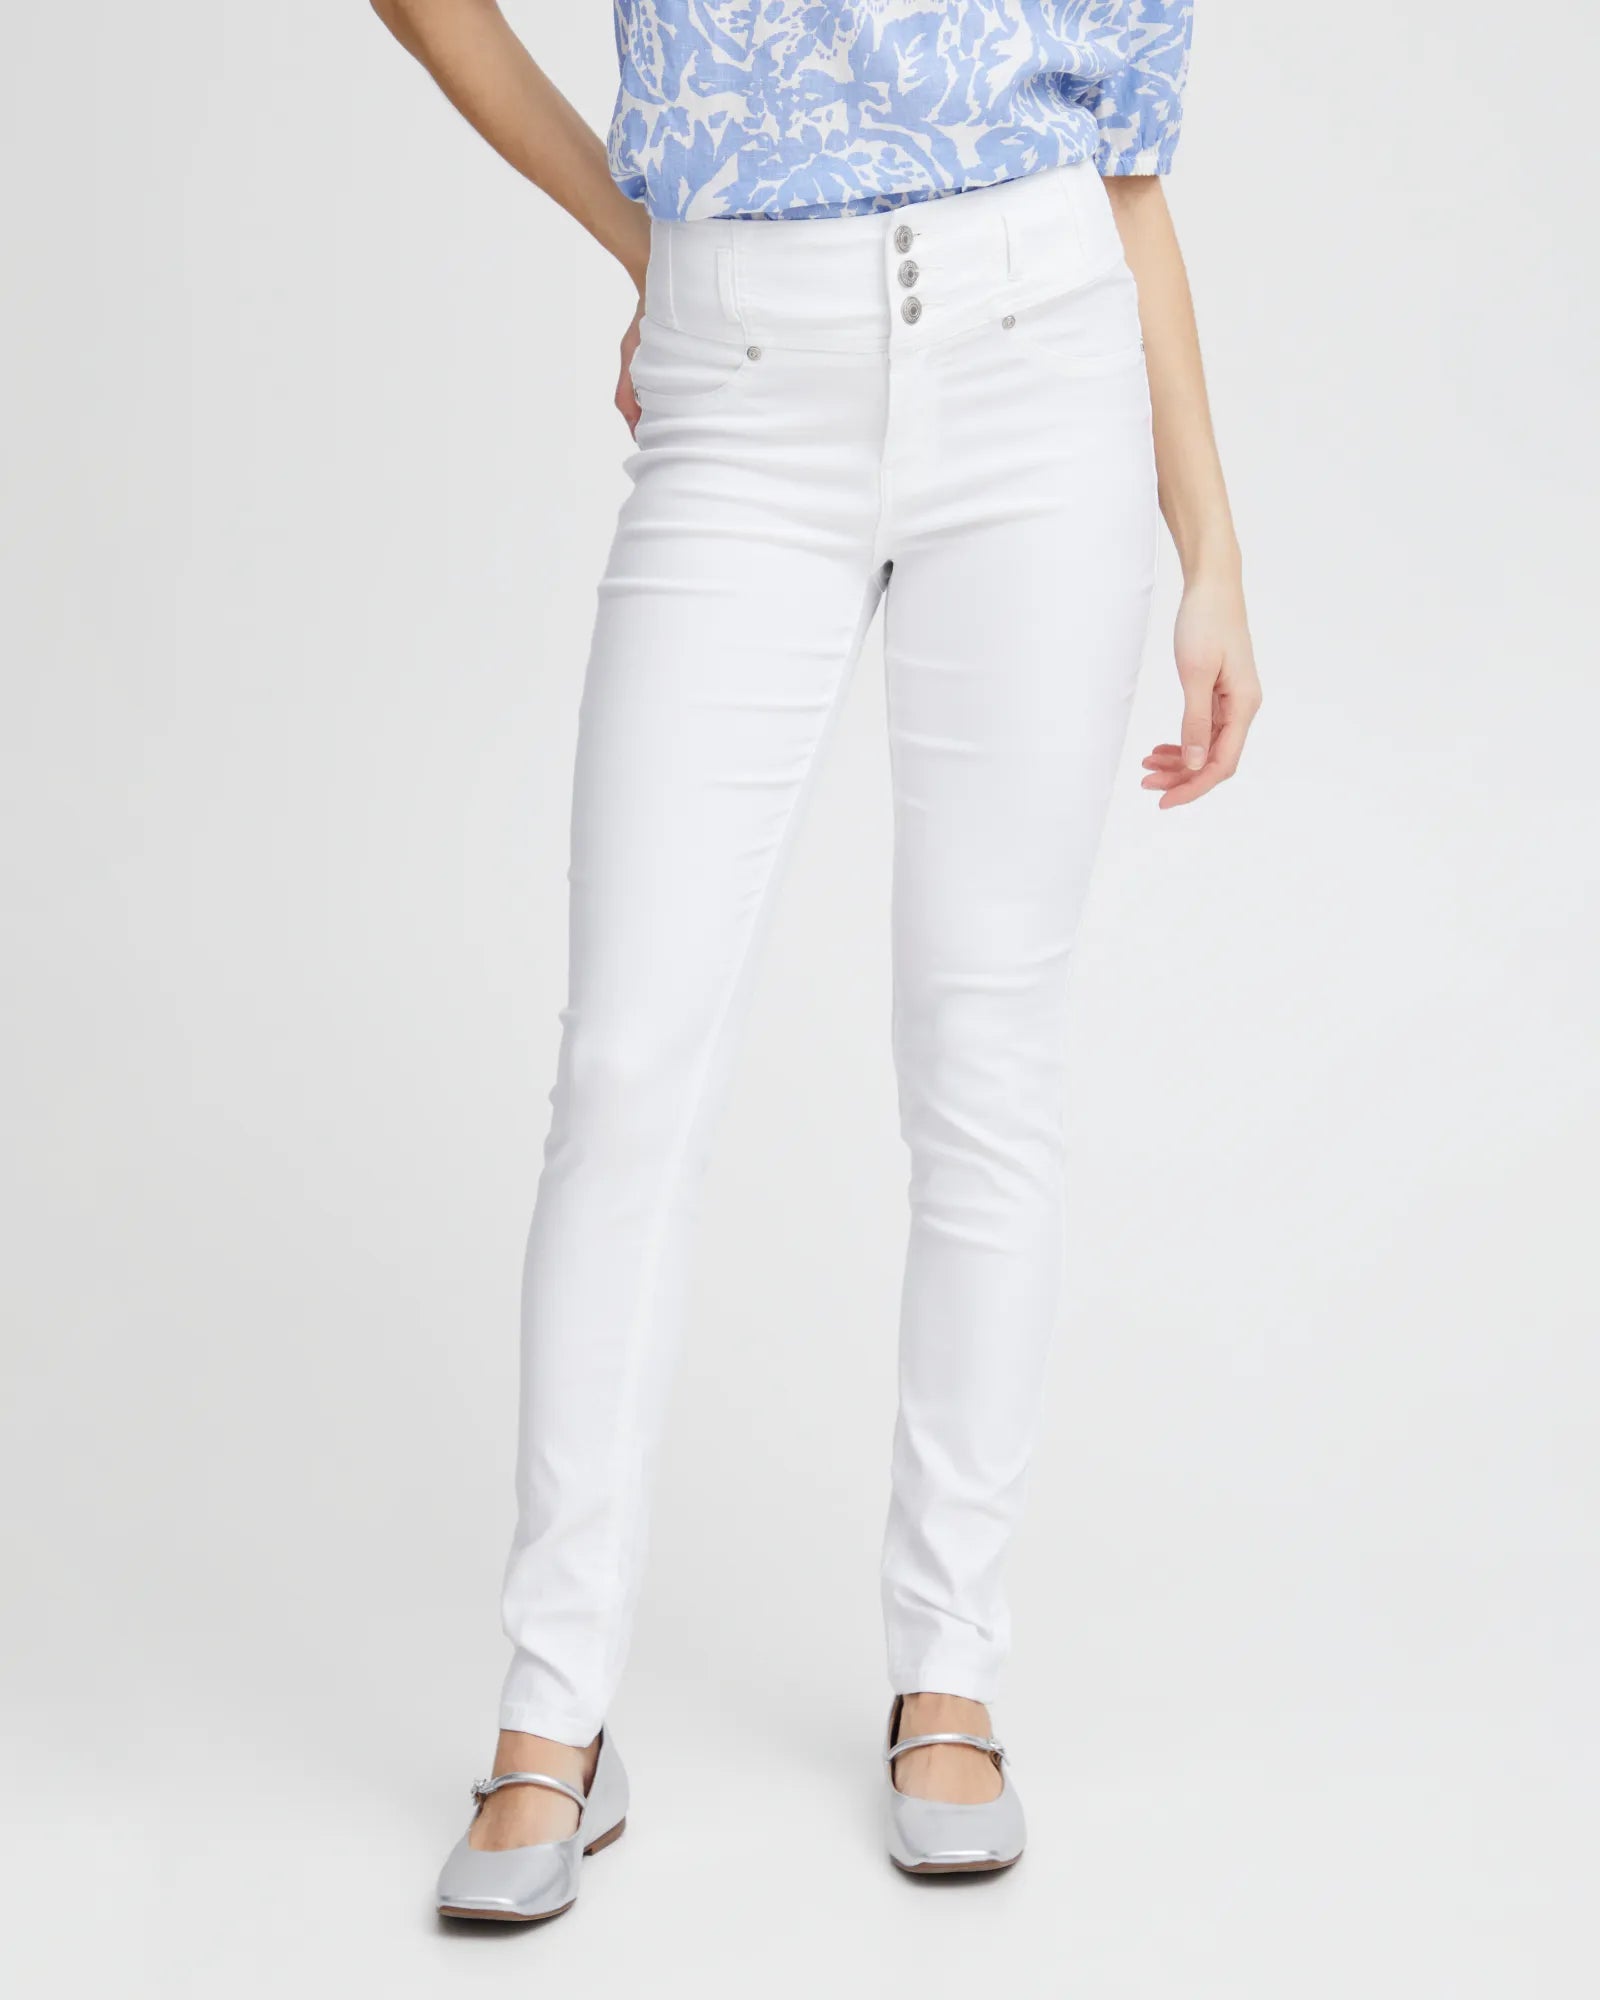 FRZALIN Jeans - White